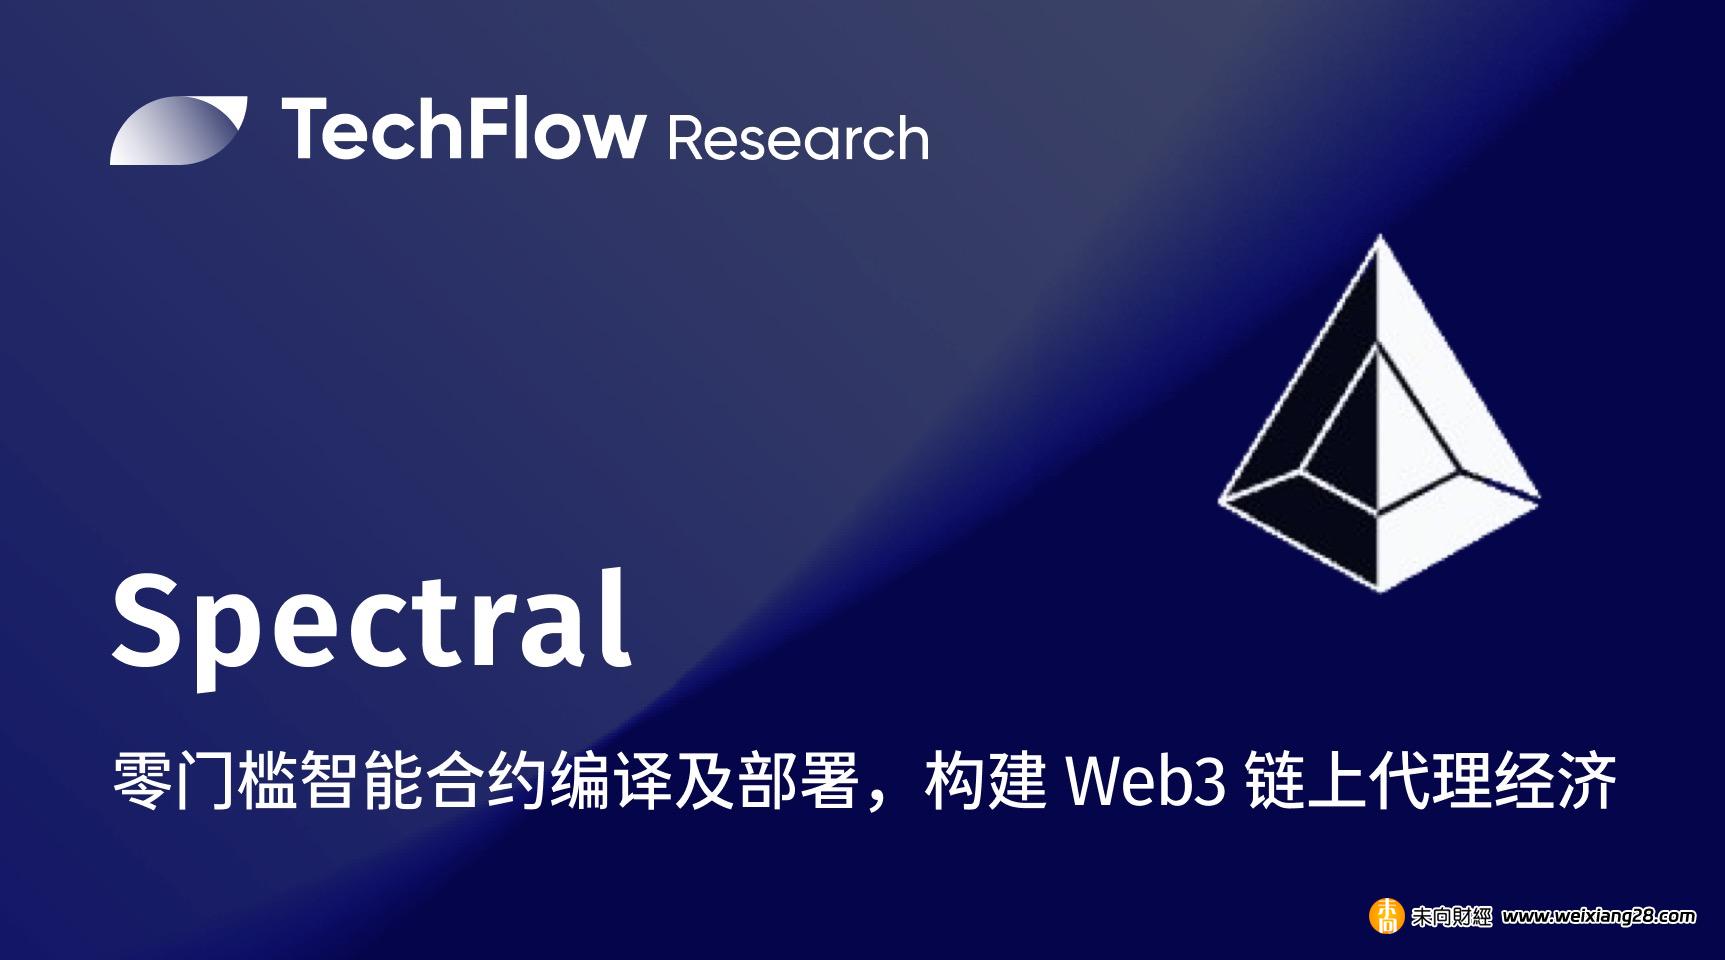 Spectral：800 万枚空投，零门槛智能合约编译及部署，构建 Web3 链上代理经济插图